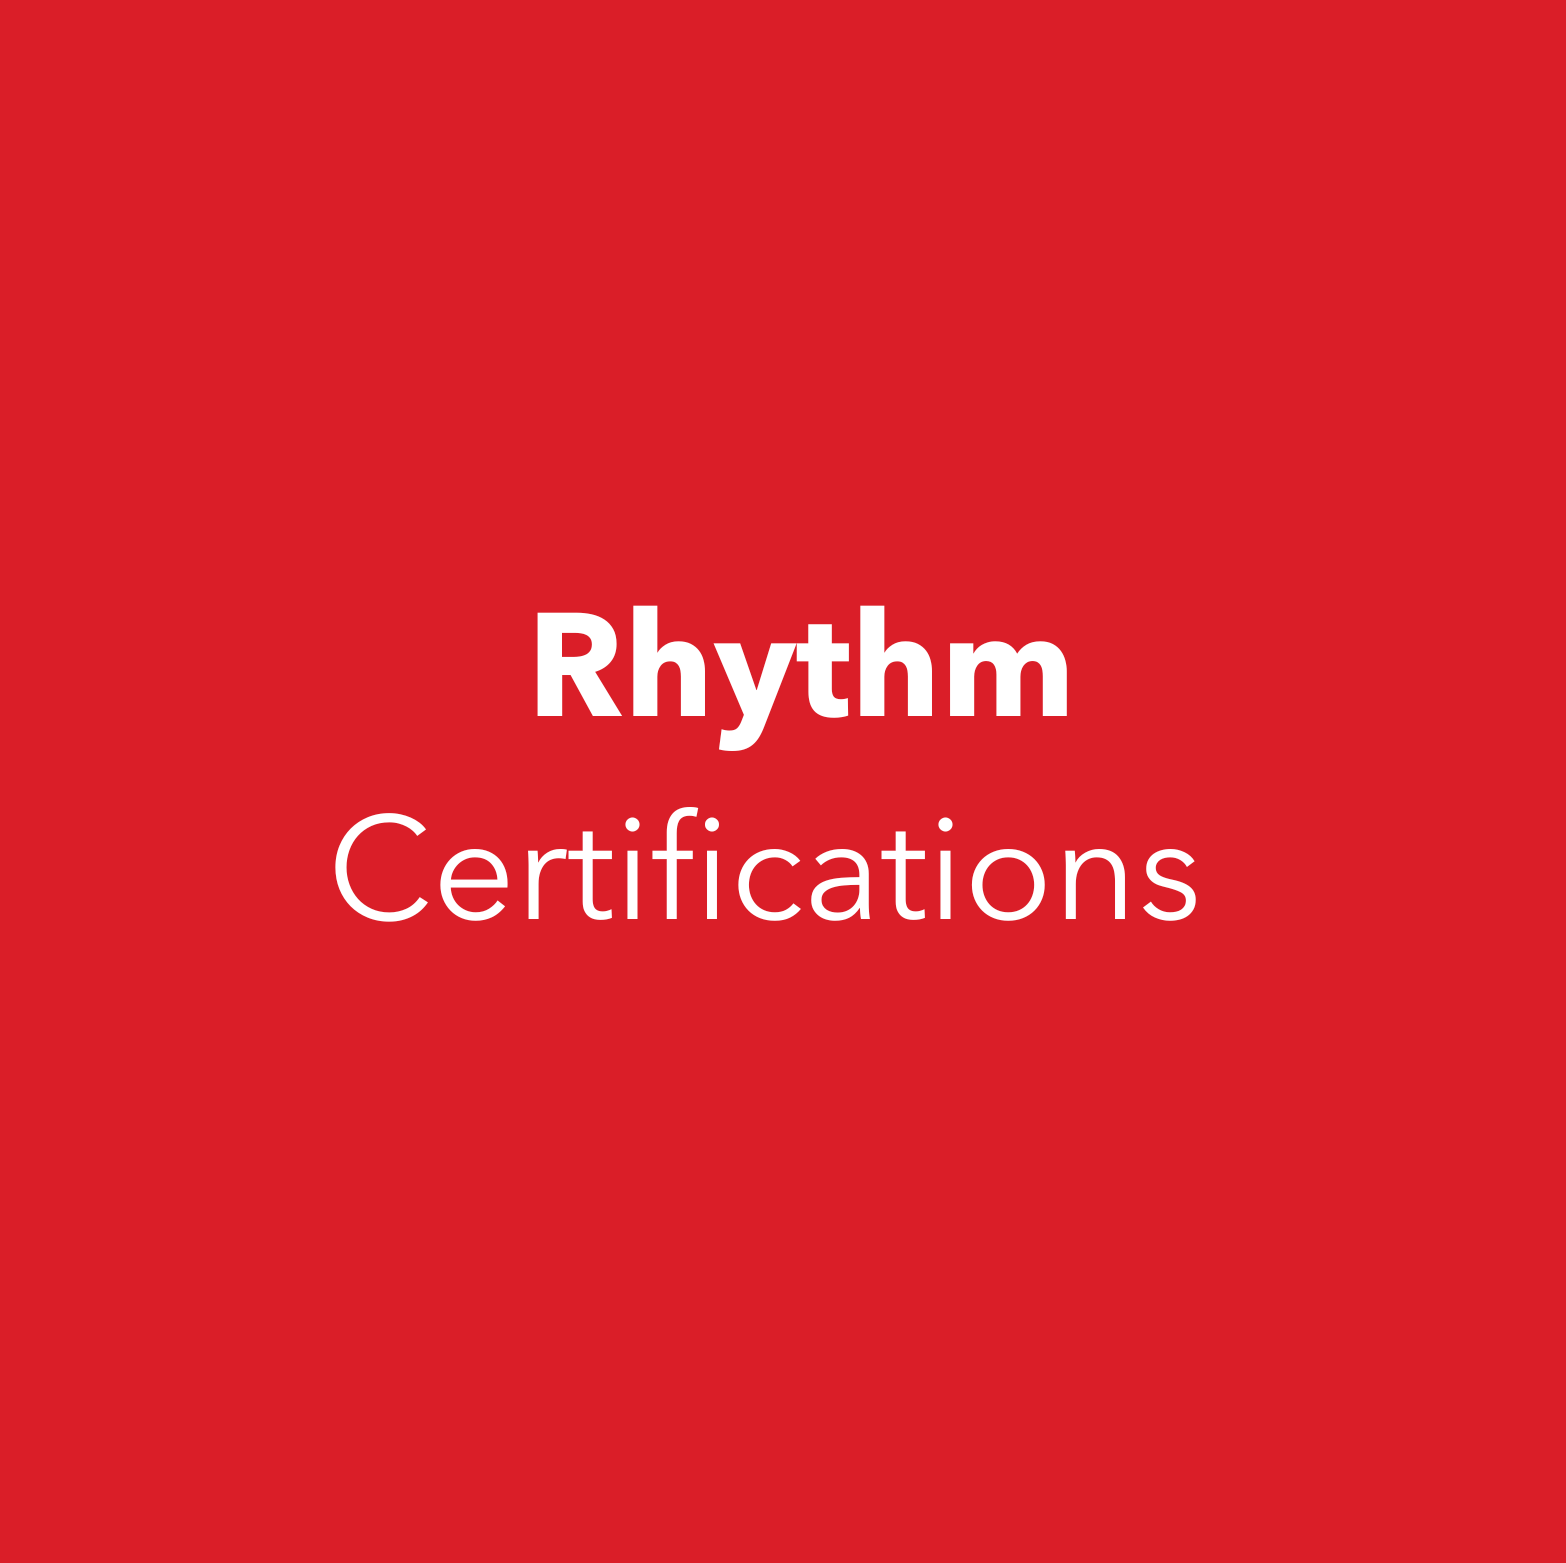 Rhythm Certifications